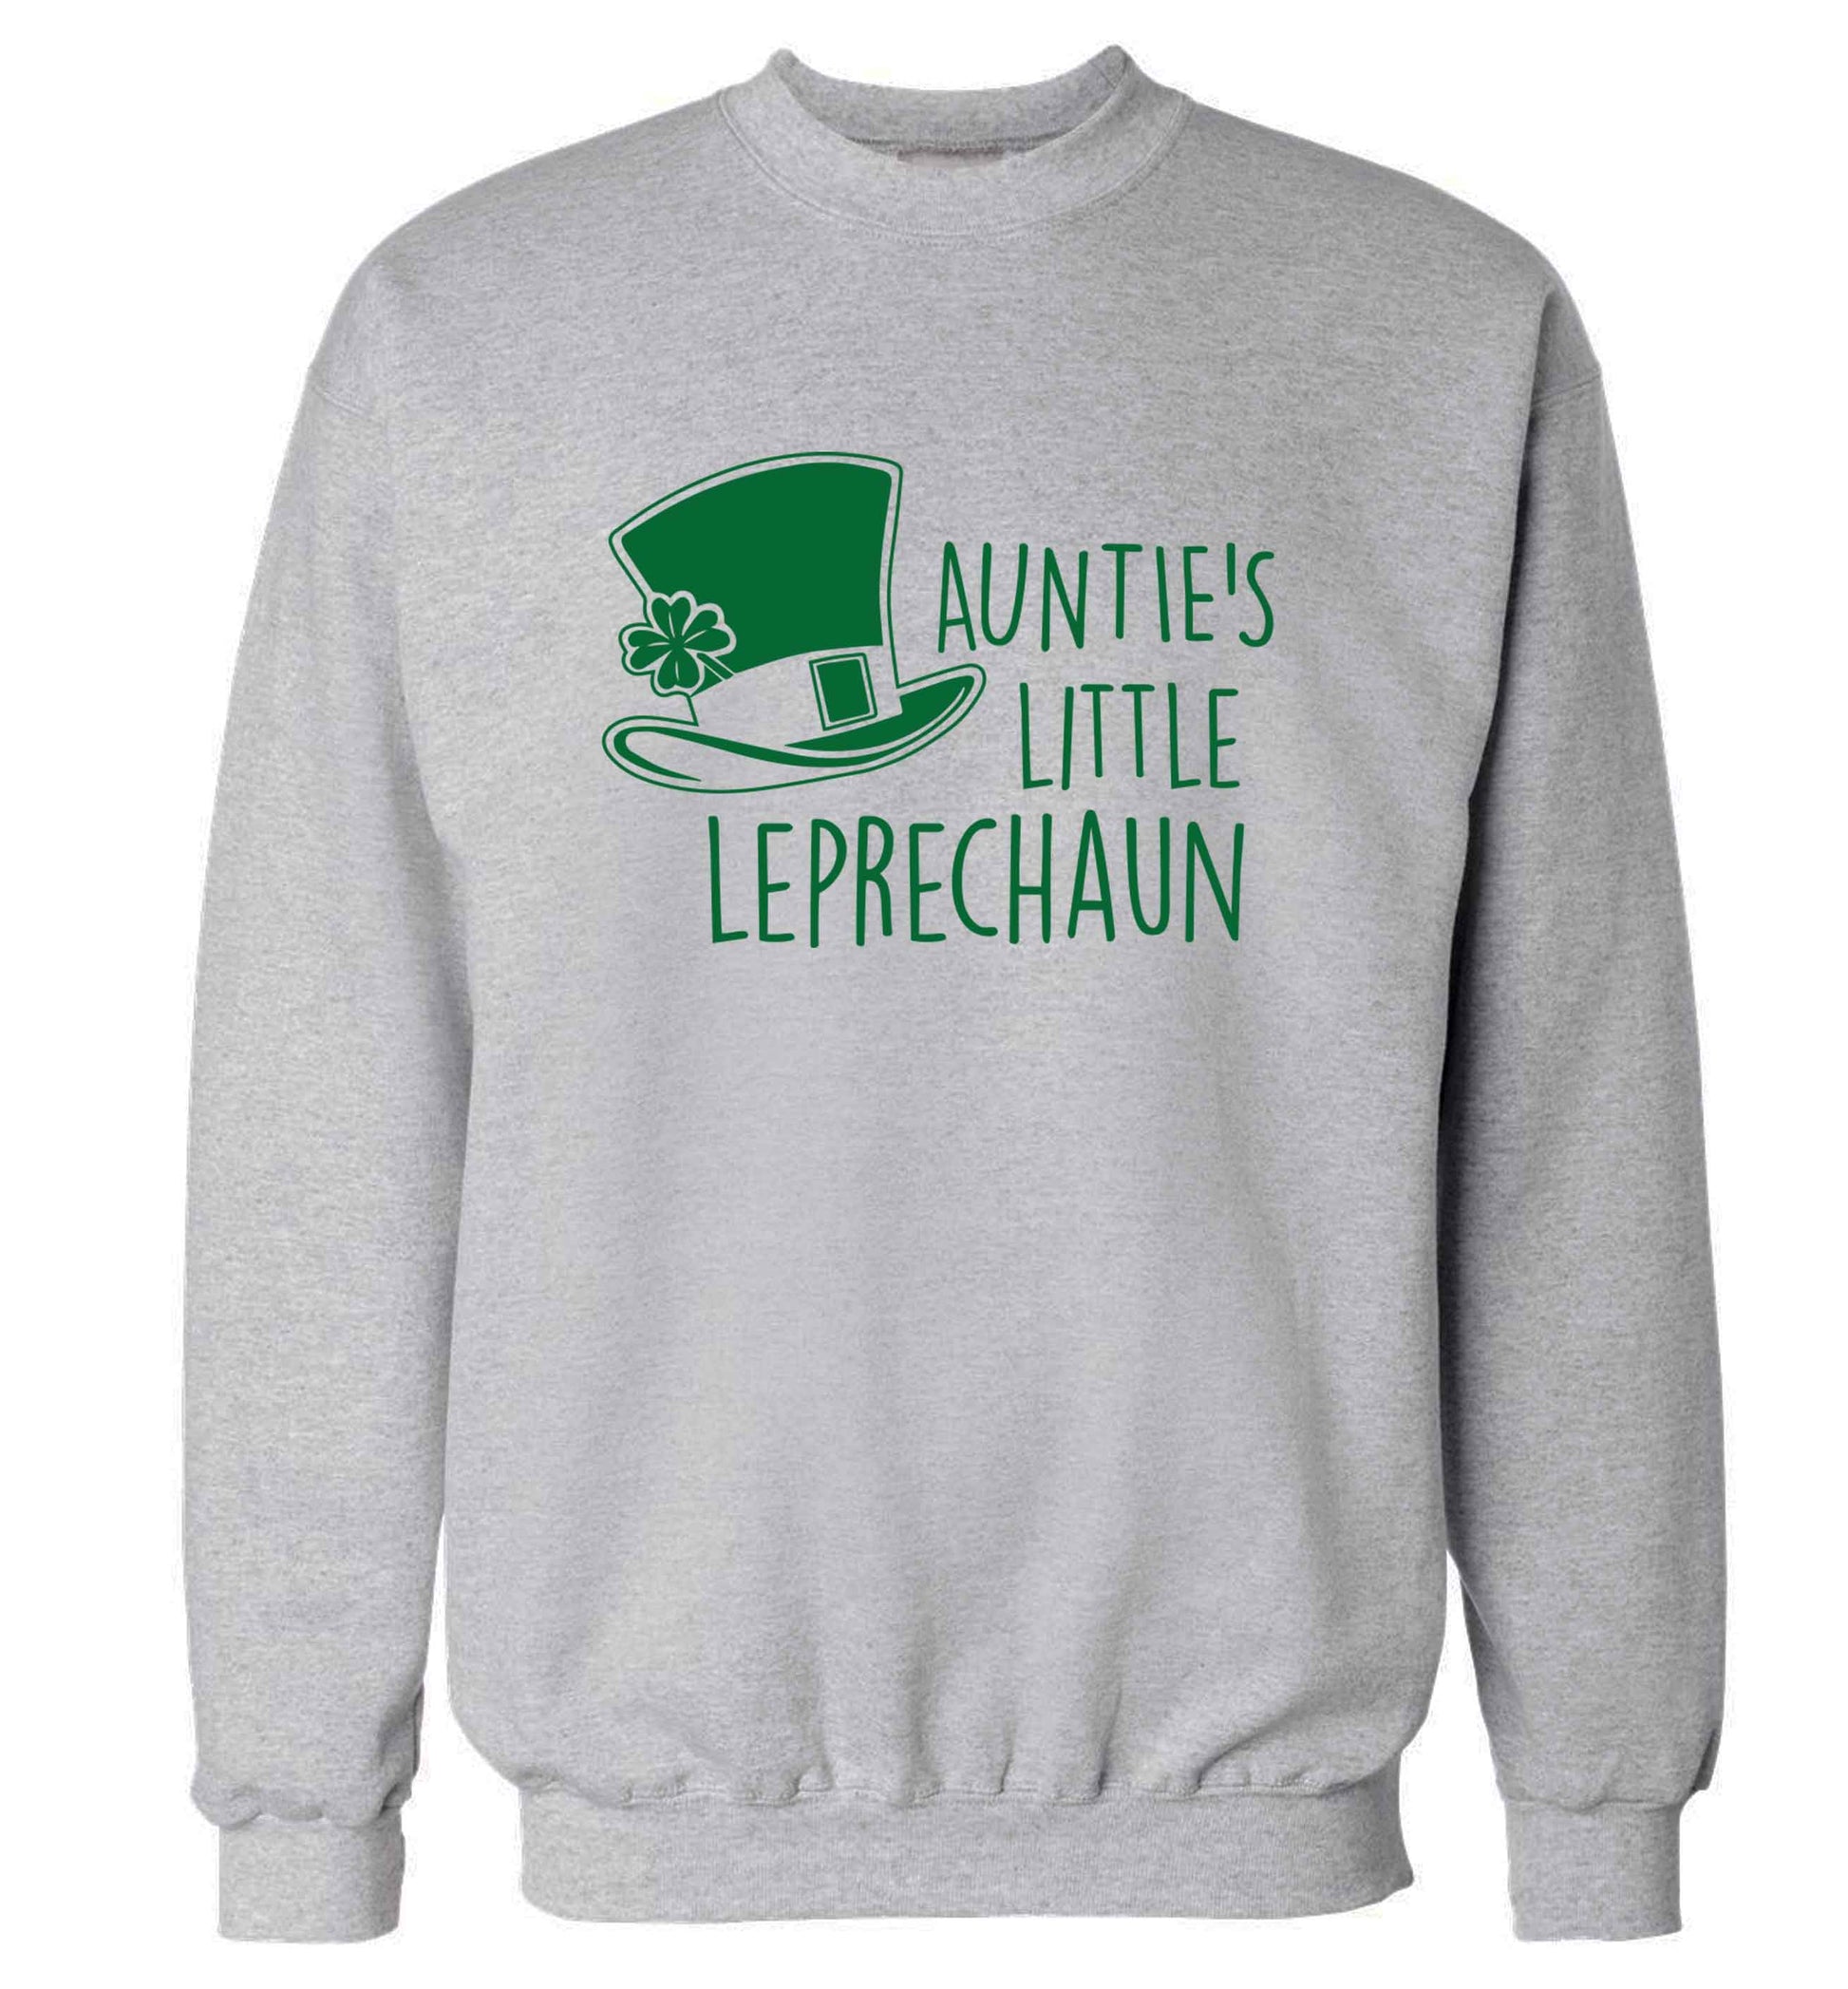 Auntie's little leprechaun adult's unisex grey sweater 2XL